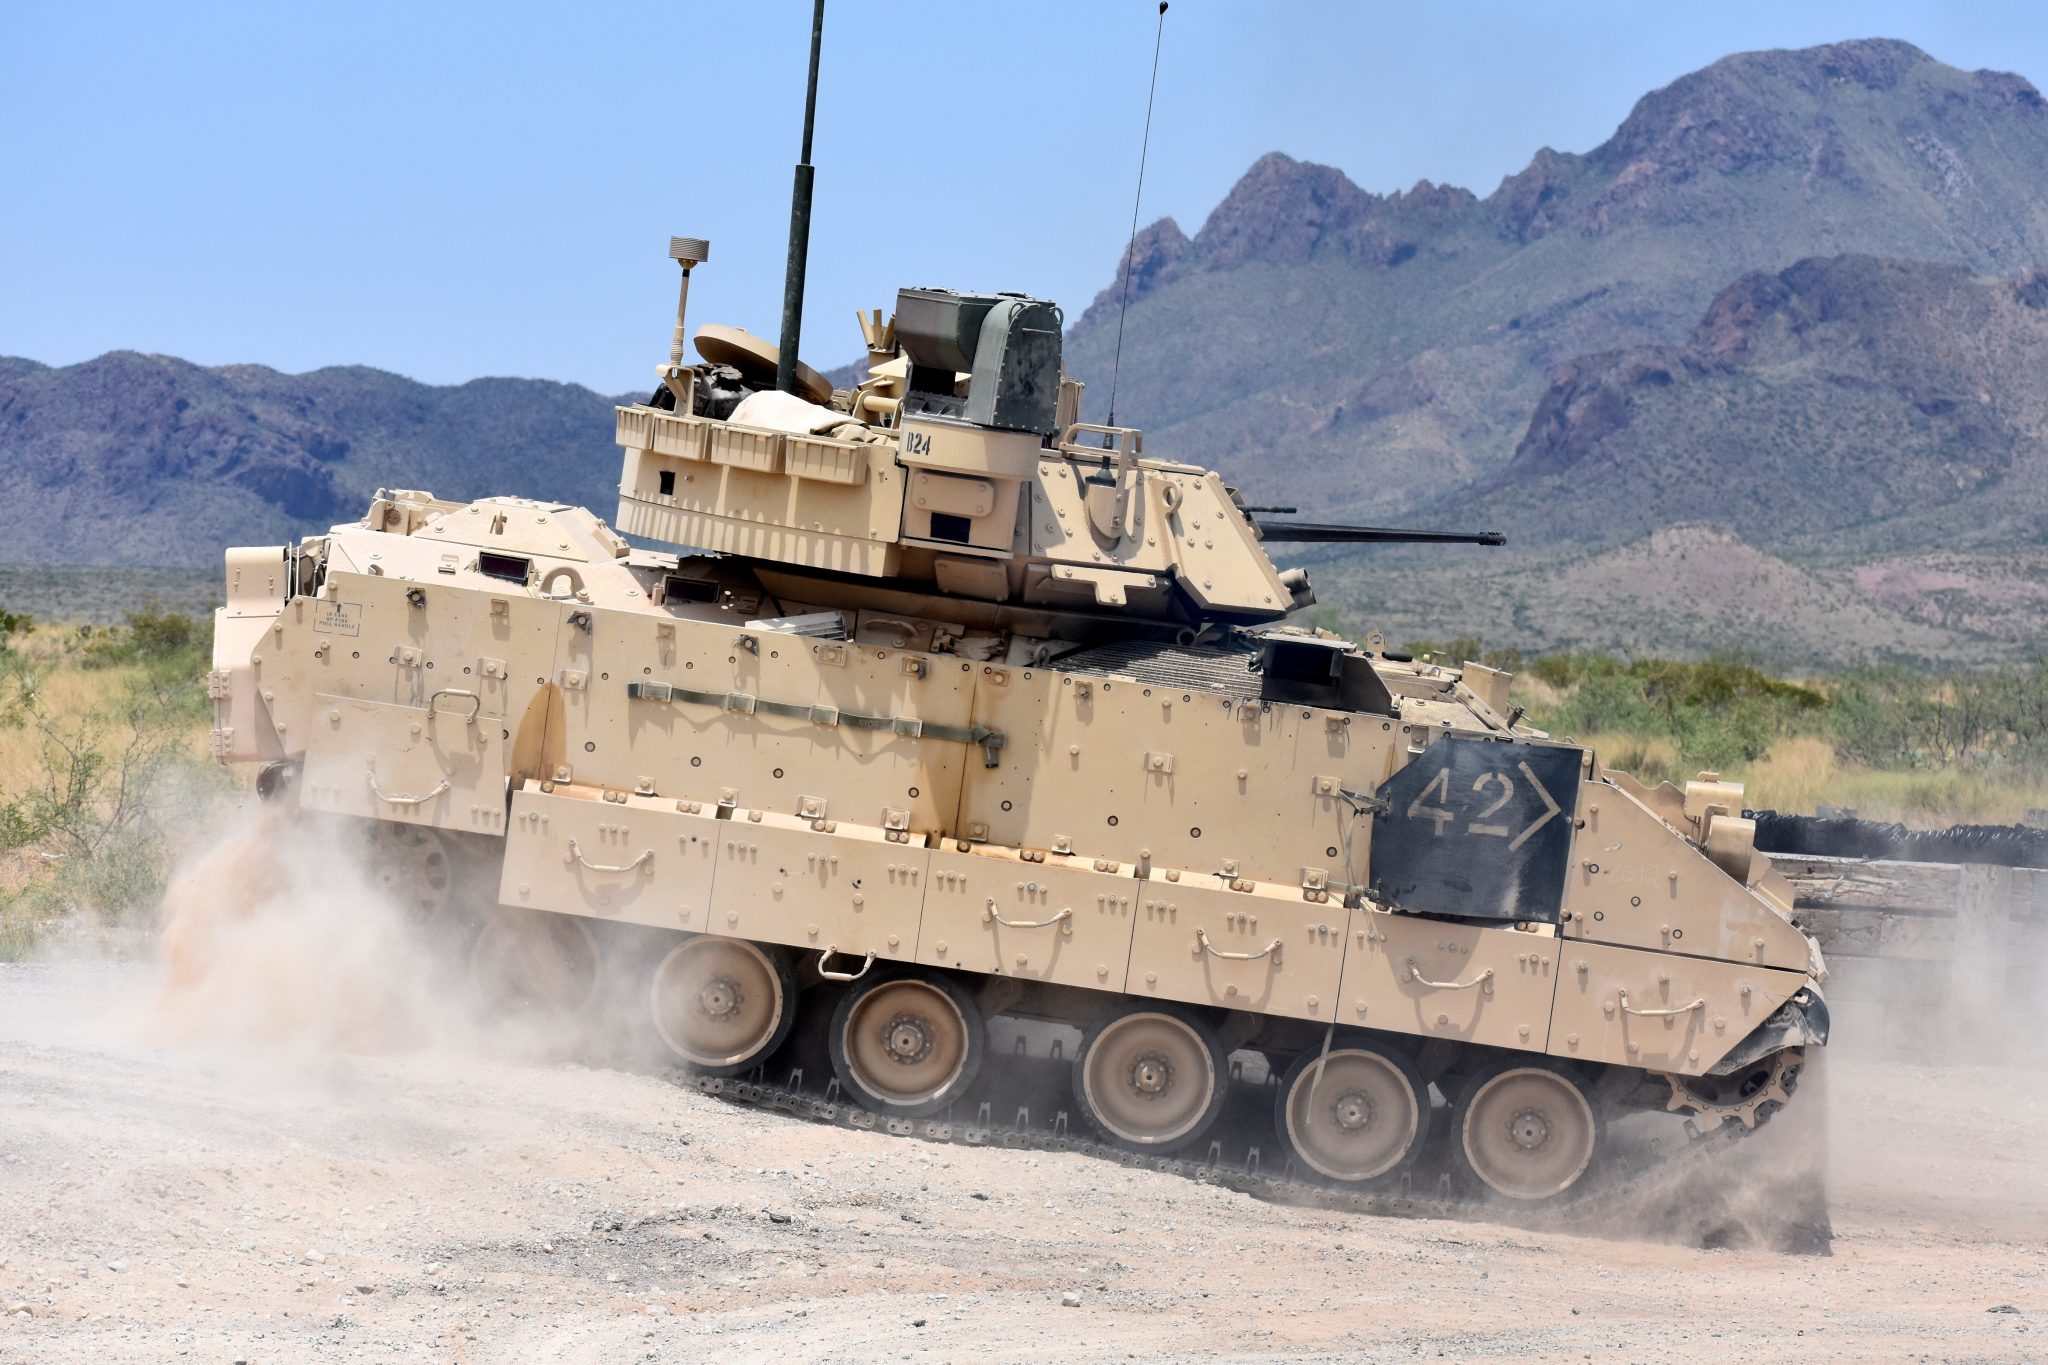 M2 Bradley infantry fighting vehicle